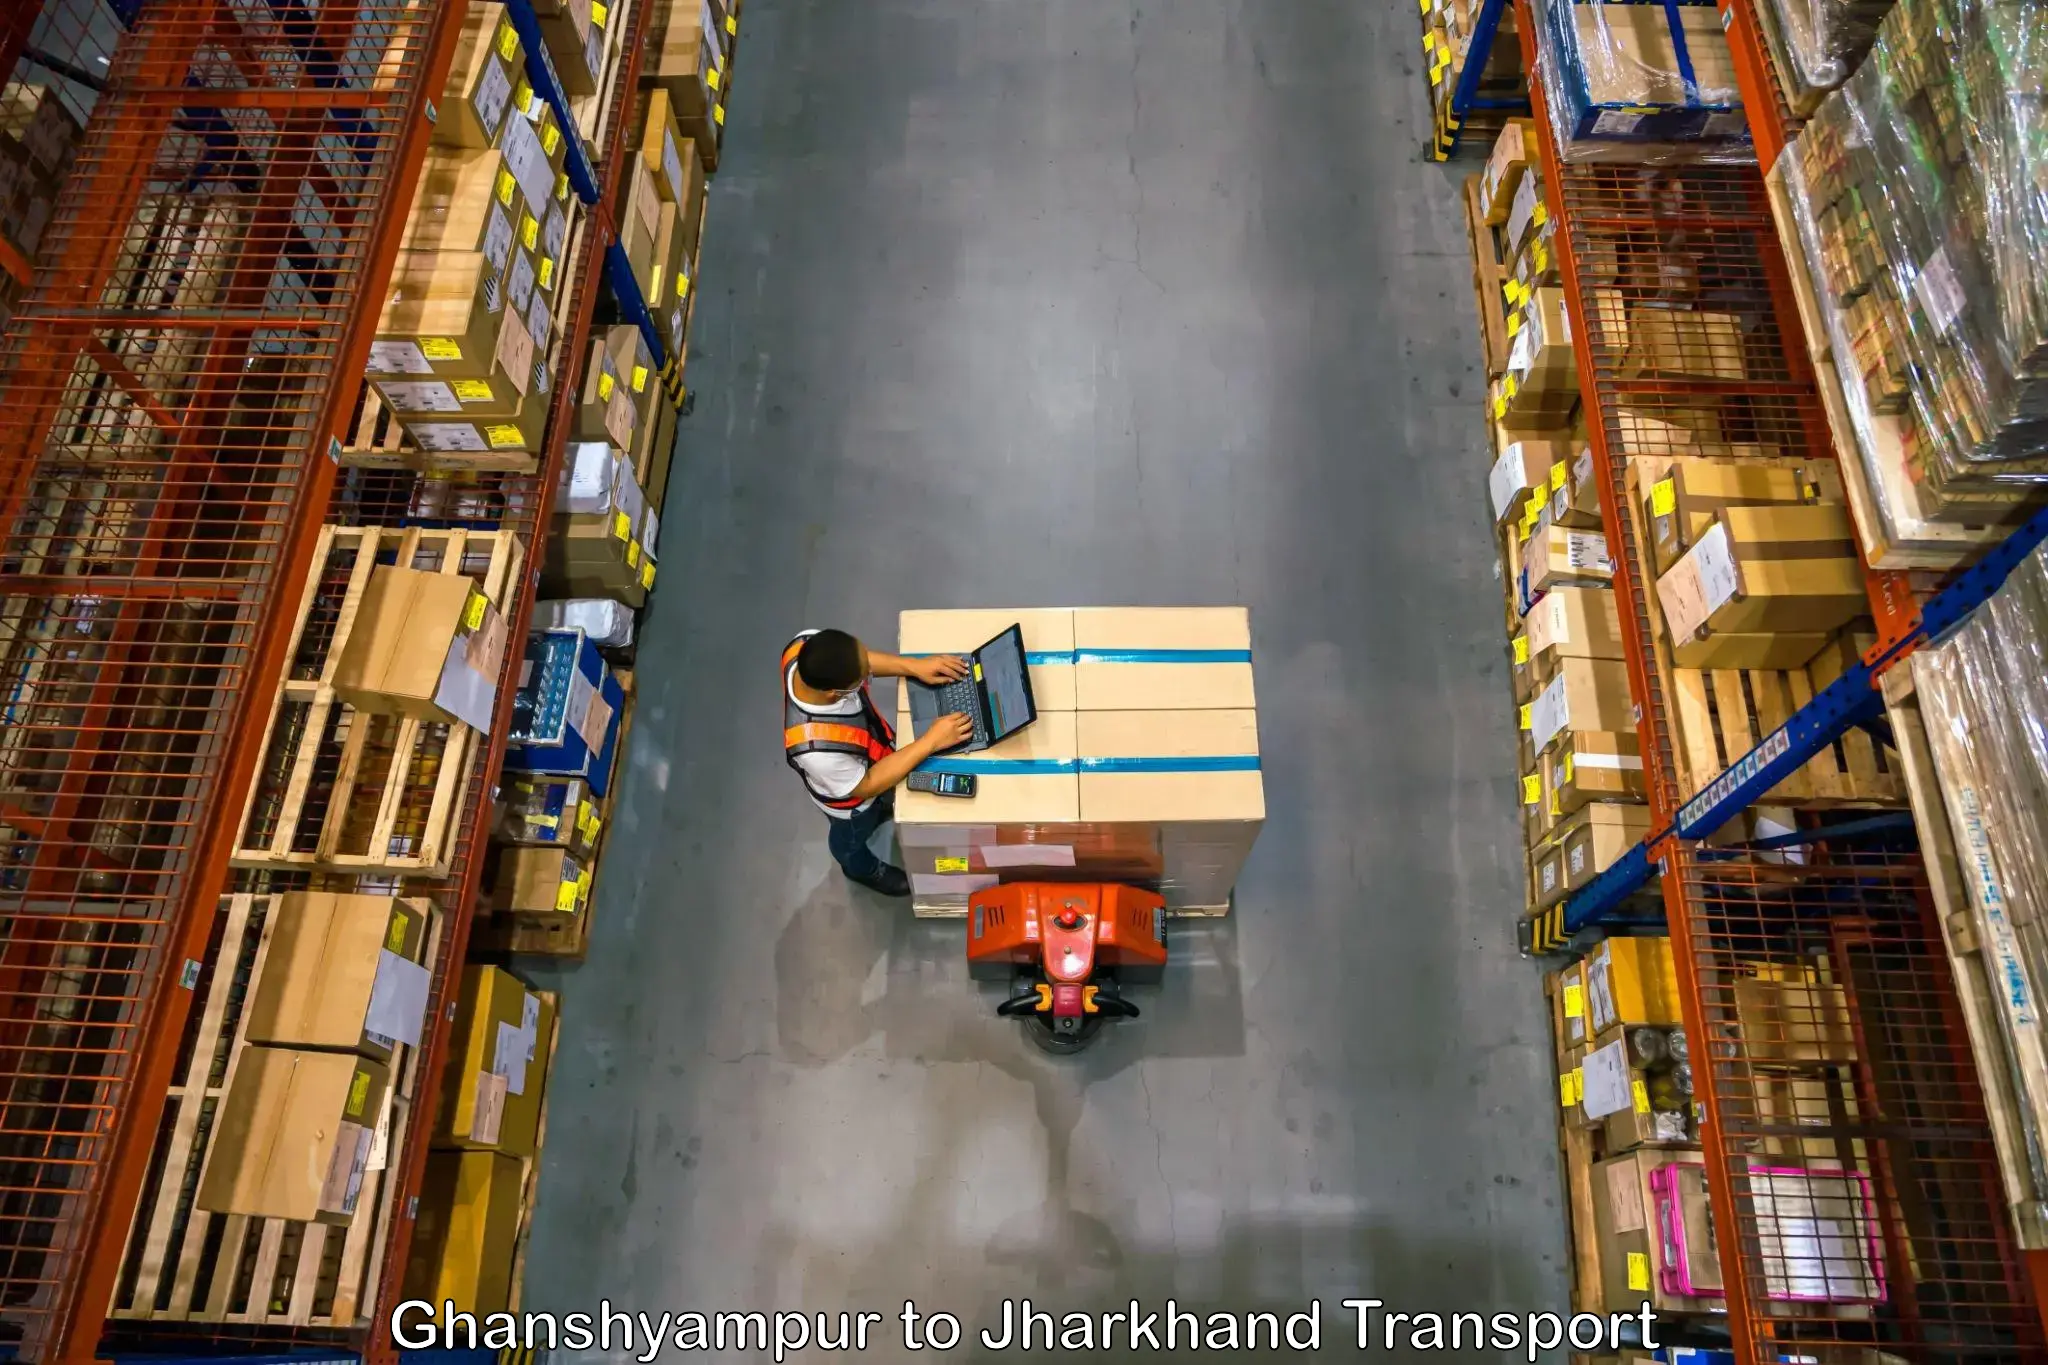 Shipping partner Ghanshyampur to Satbarwa